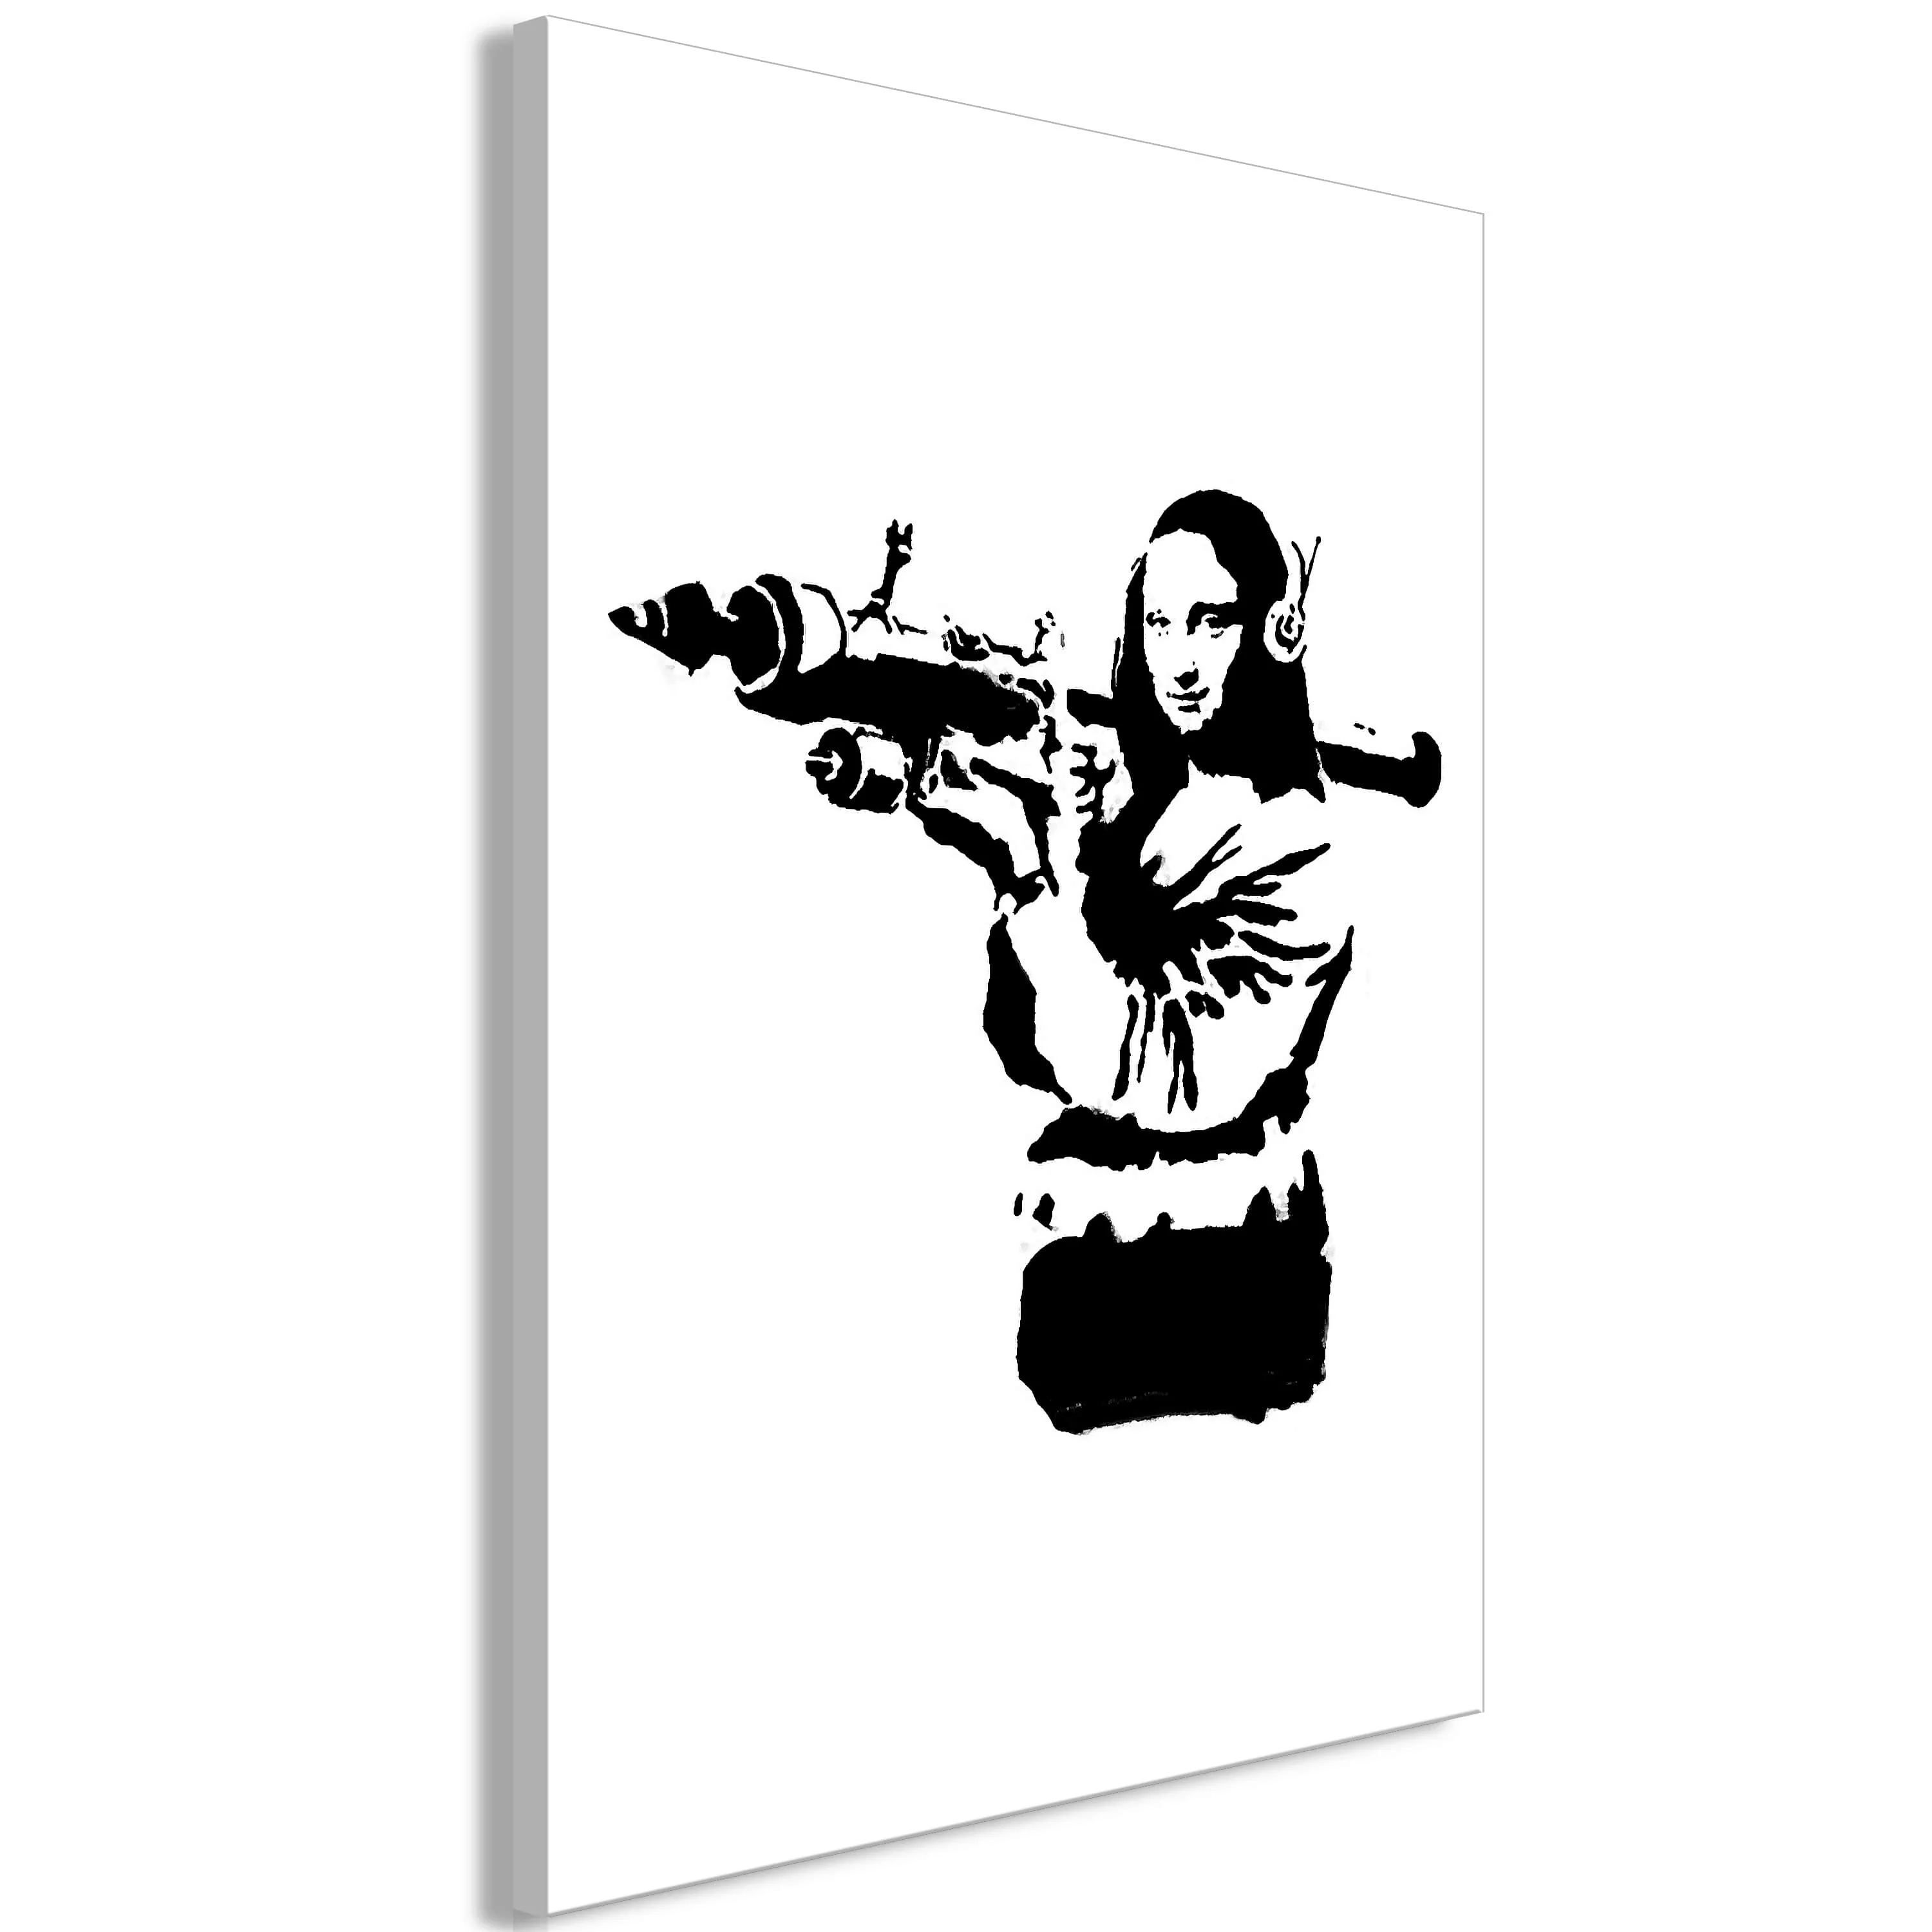 Wandbild - Banksy Mona Lisa with Rocket Launcher (1 Part) Vertical günstig online kaufen